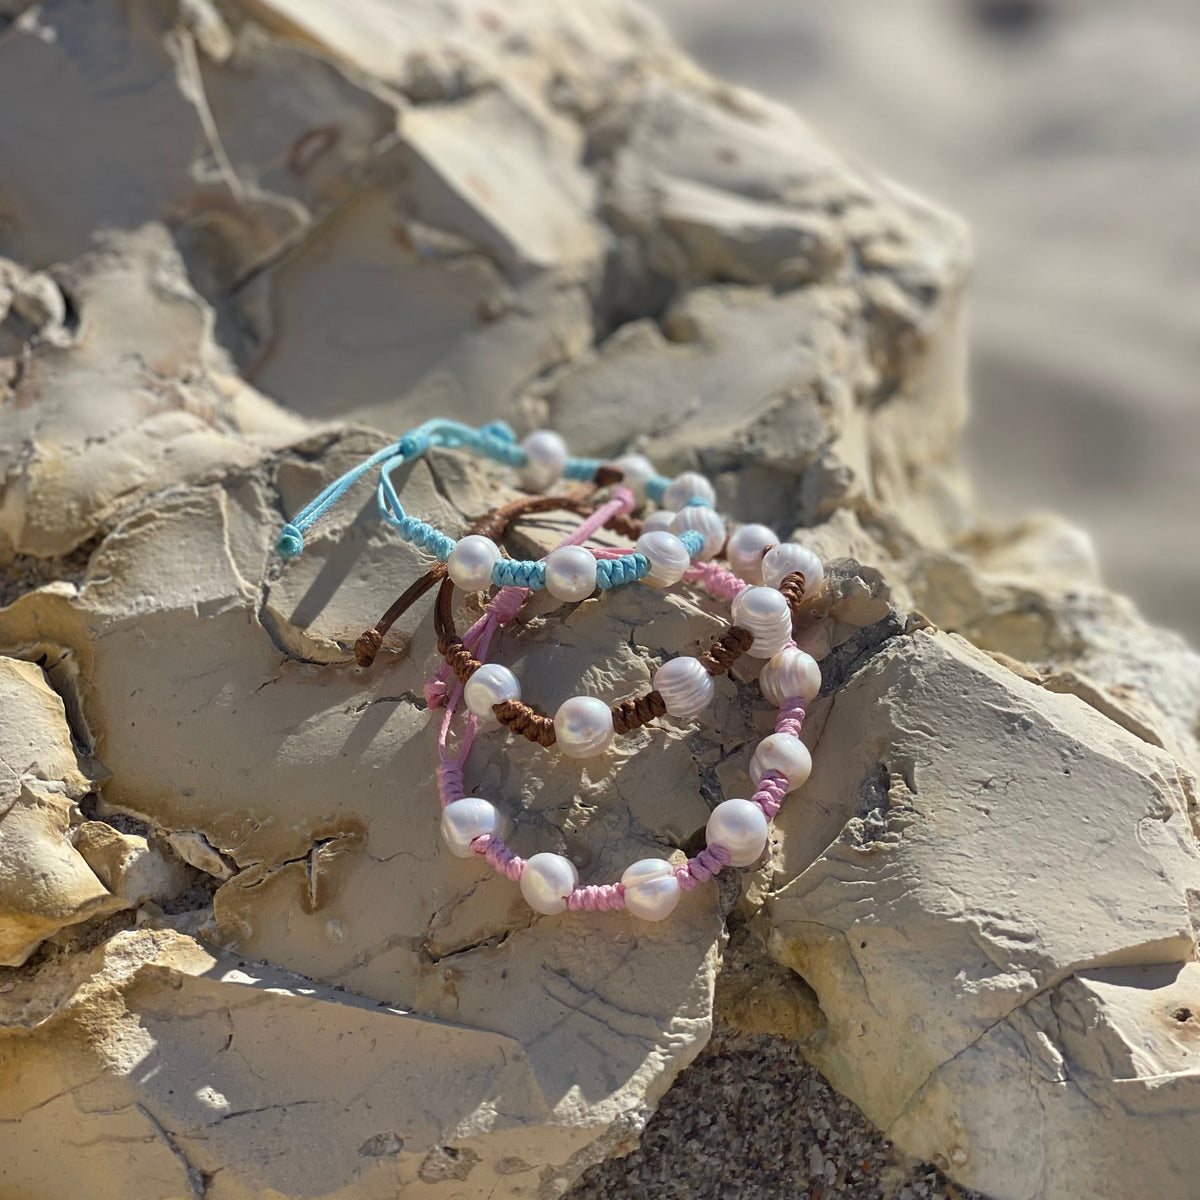 Capri Pearl Woven Bracelet - Pink